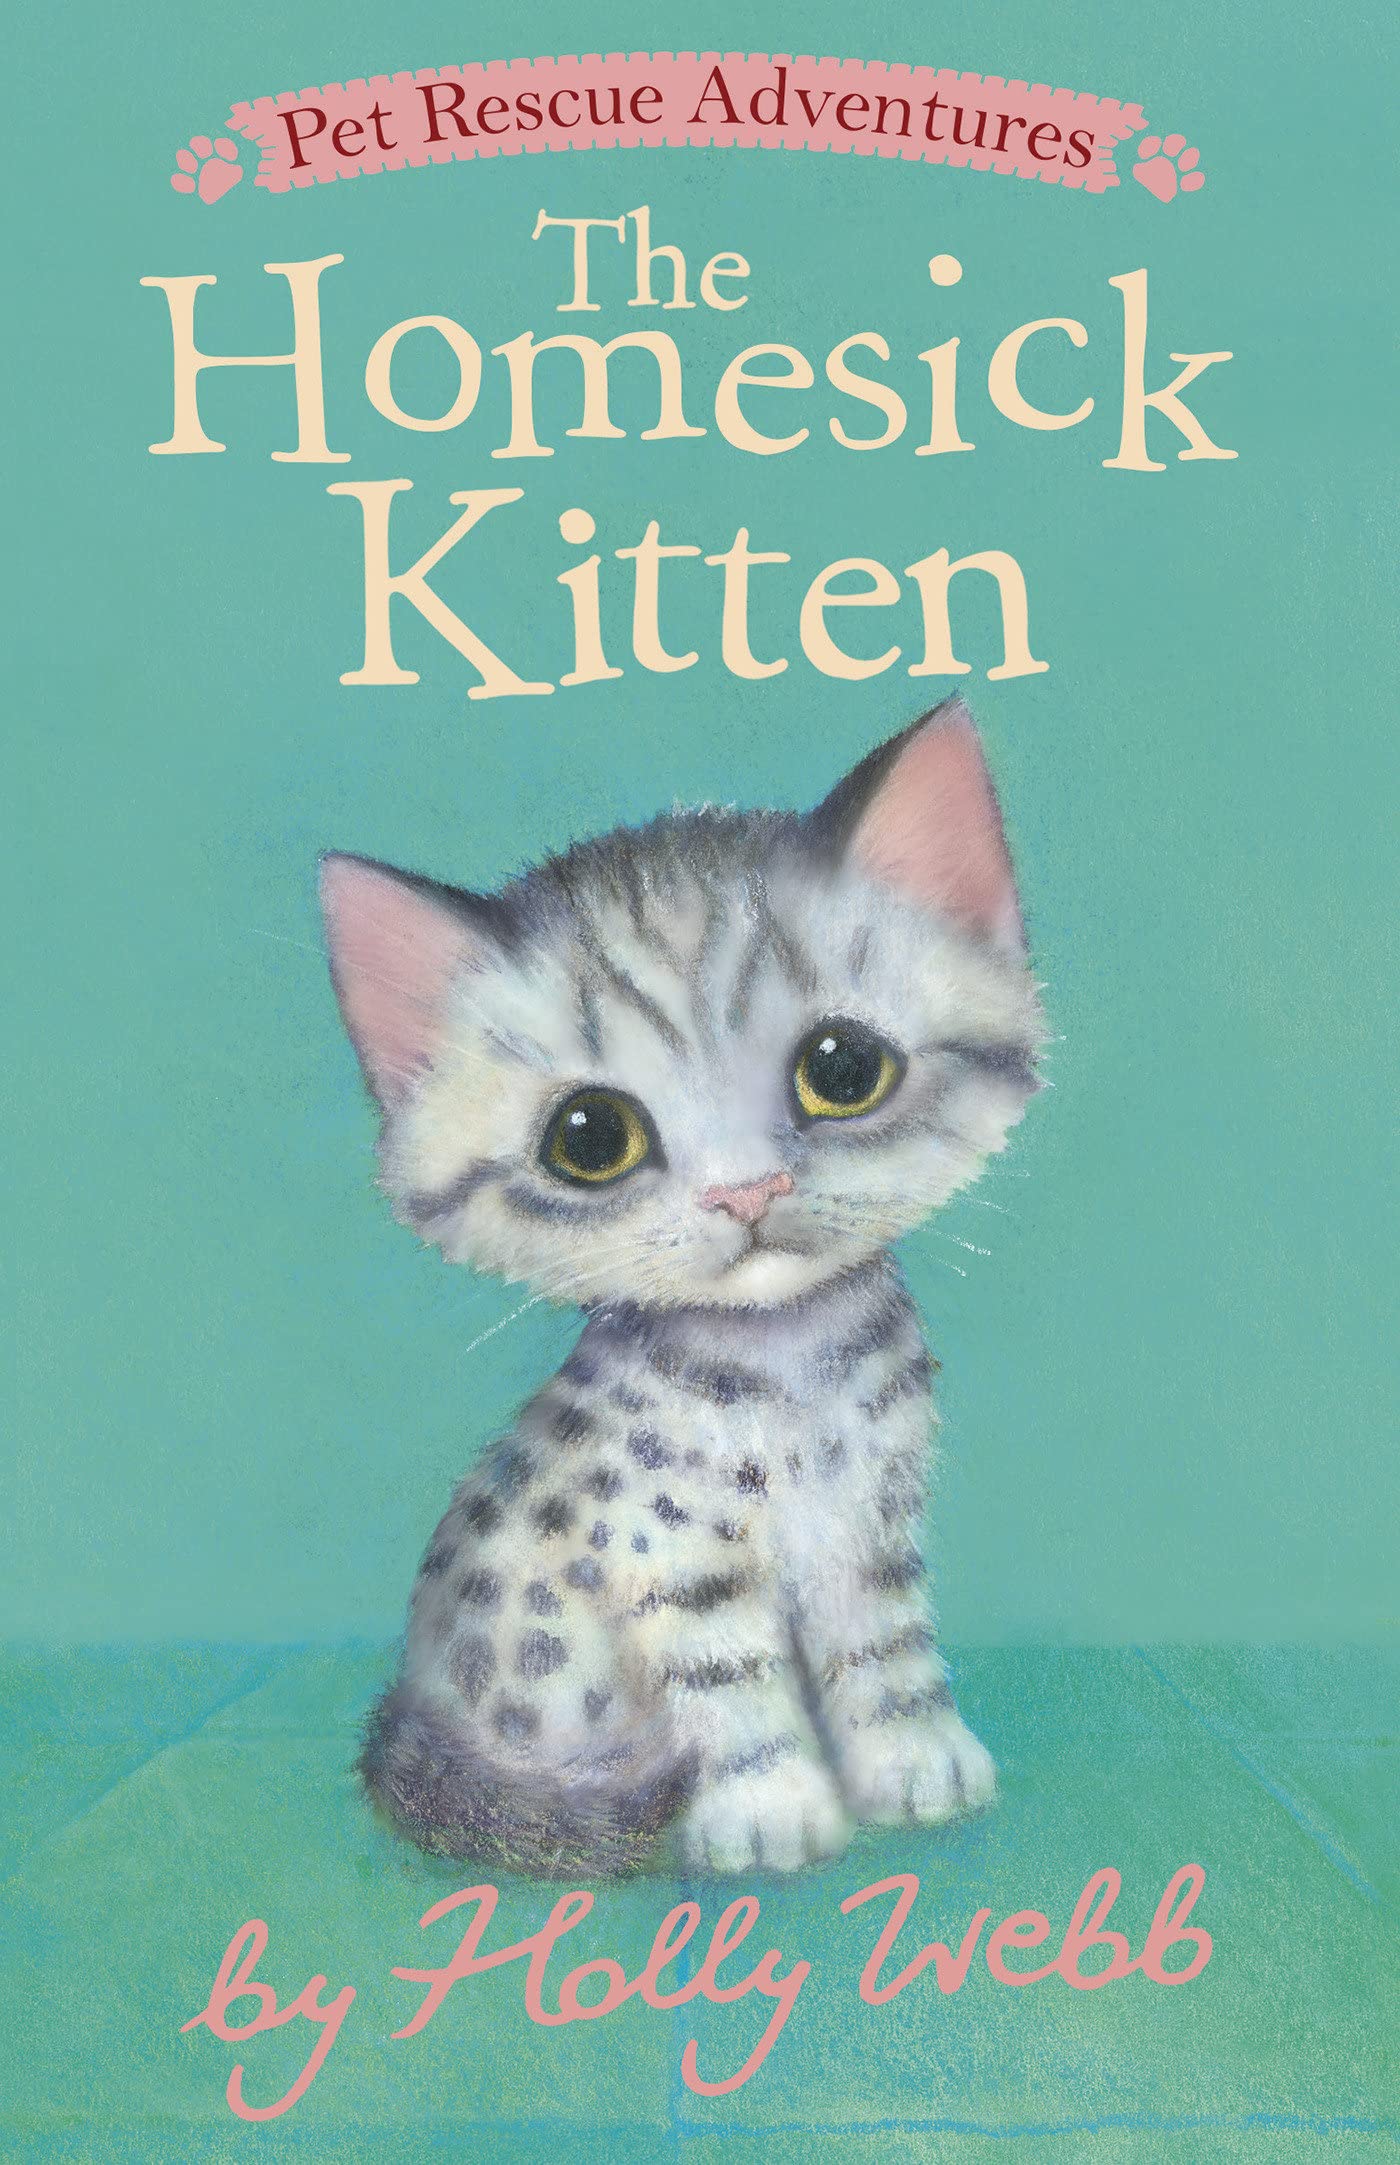 The Homesick Kitten (Pet Rescue Adventures)